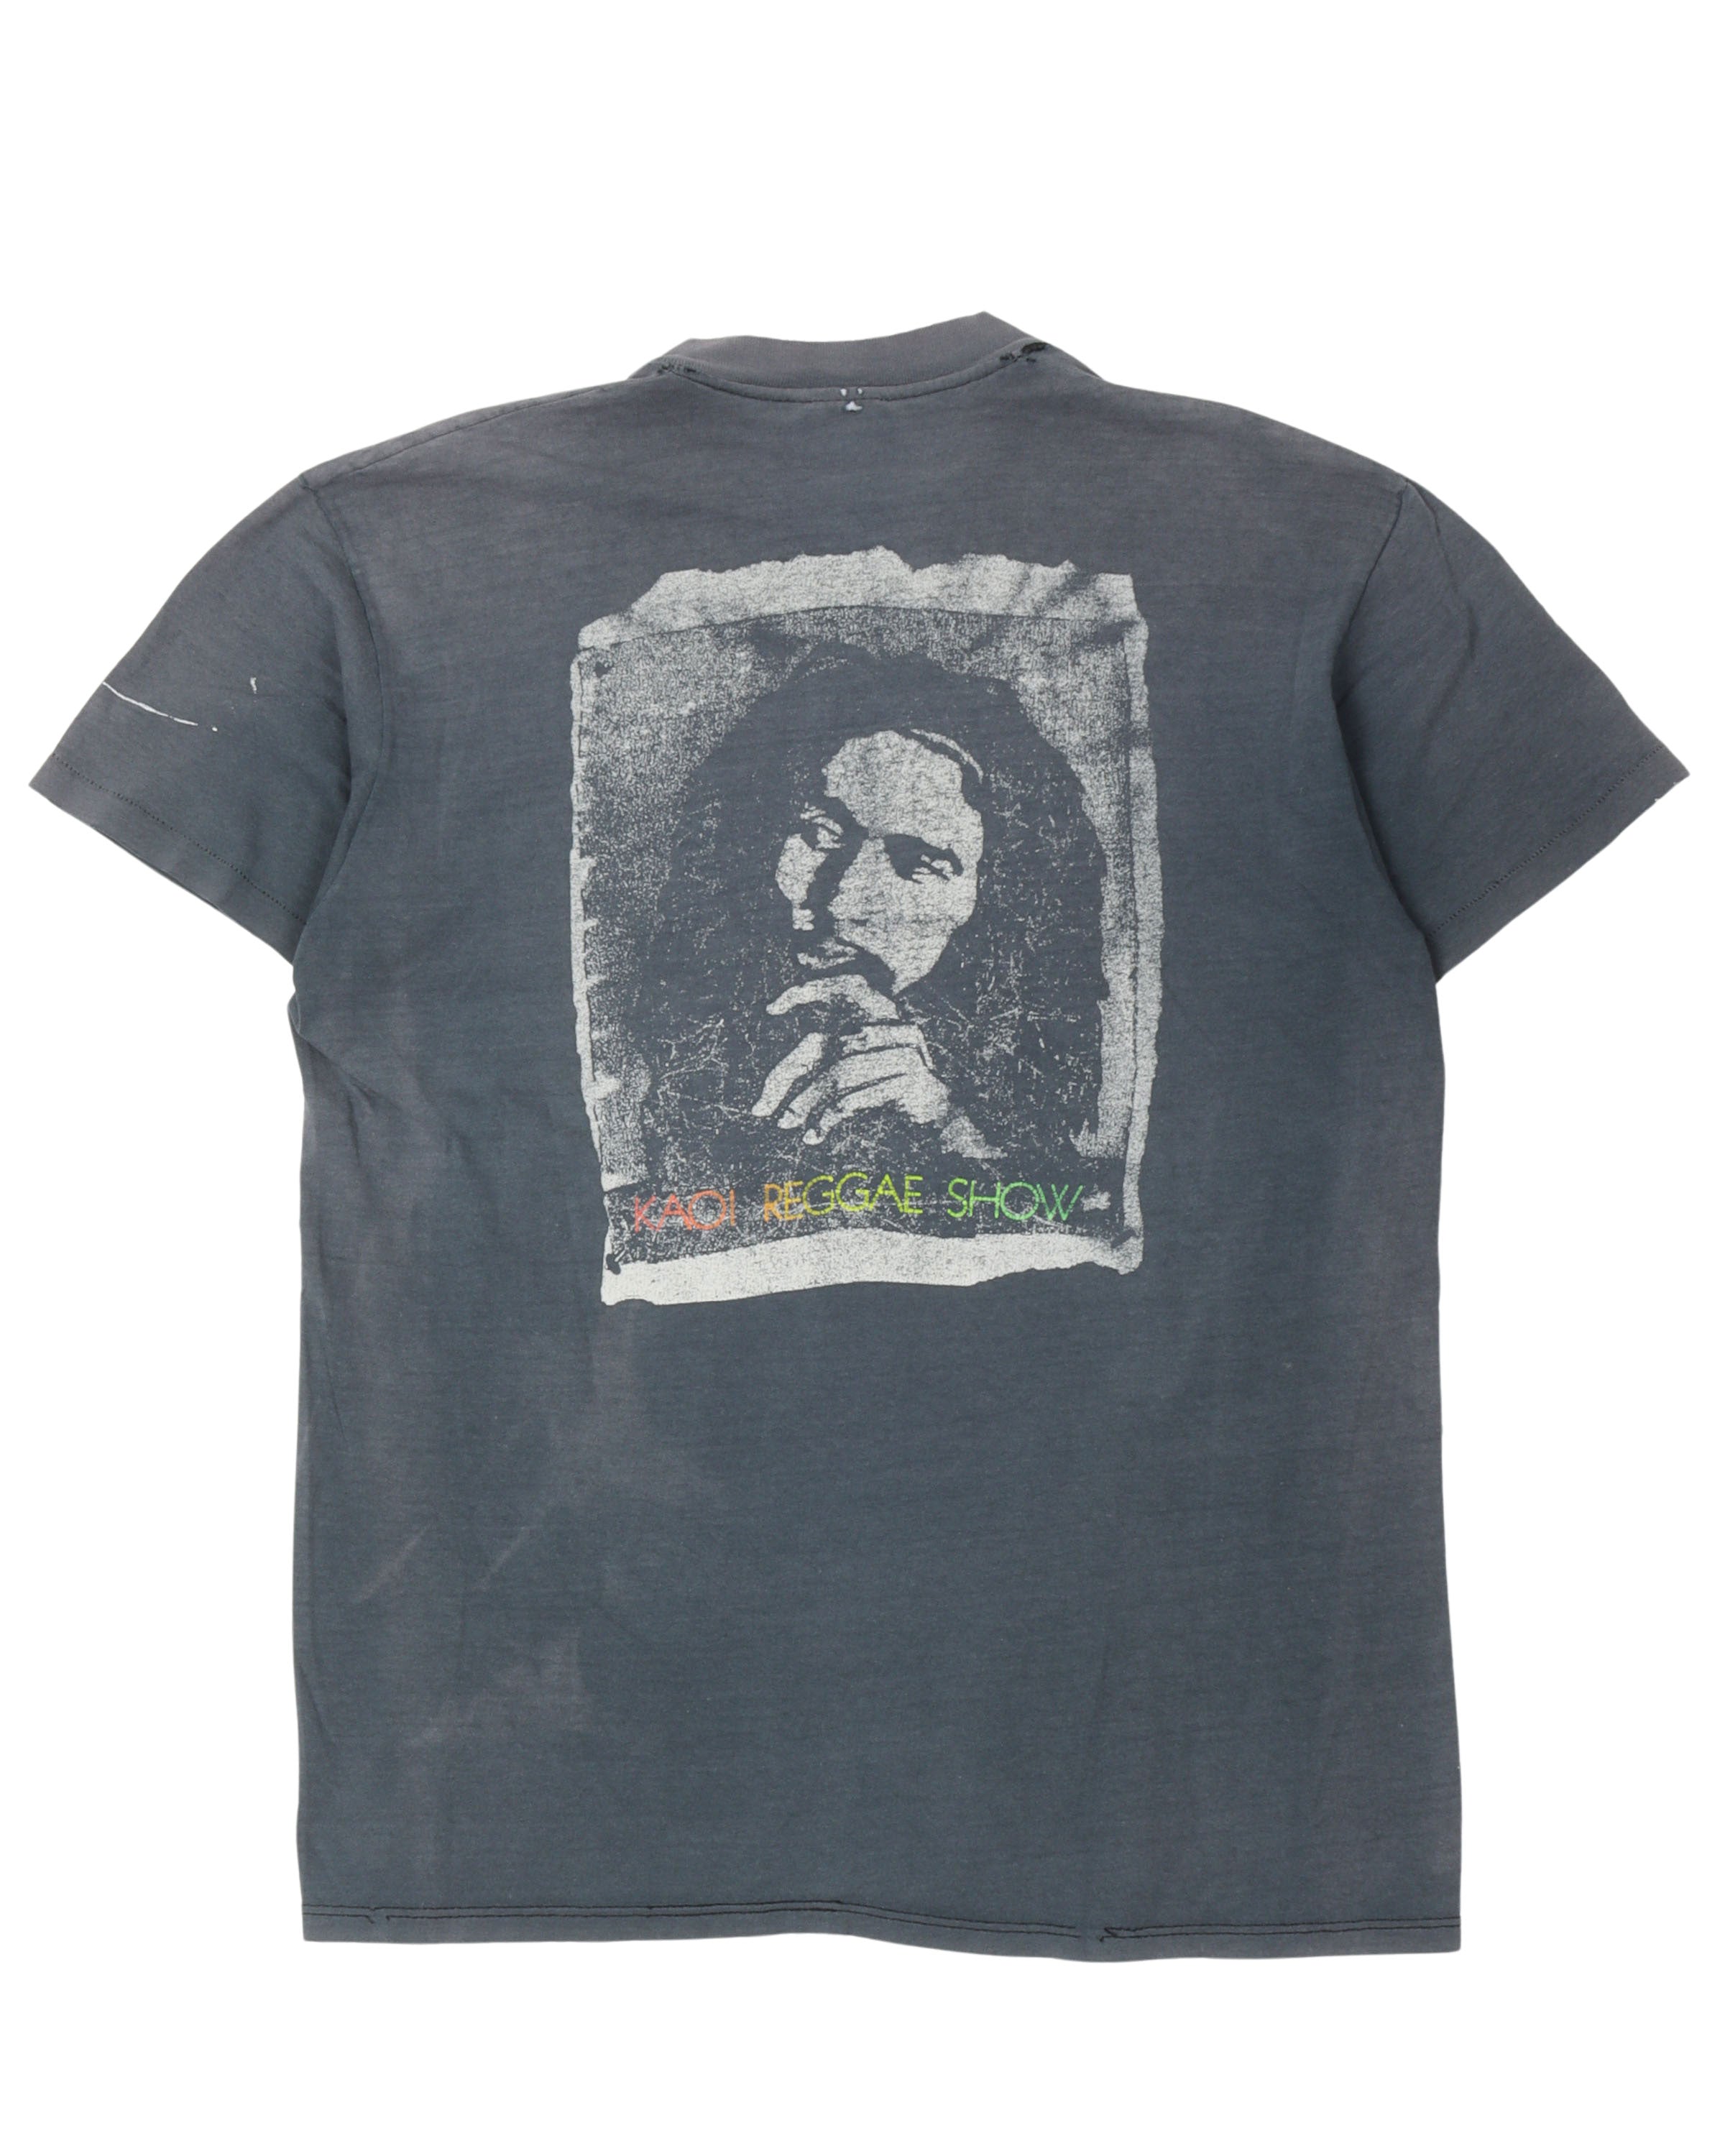 Bob Marley KAOI Reggae Show T-Shirt